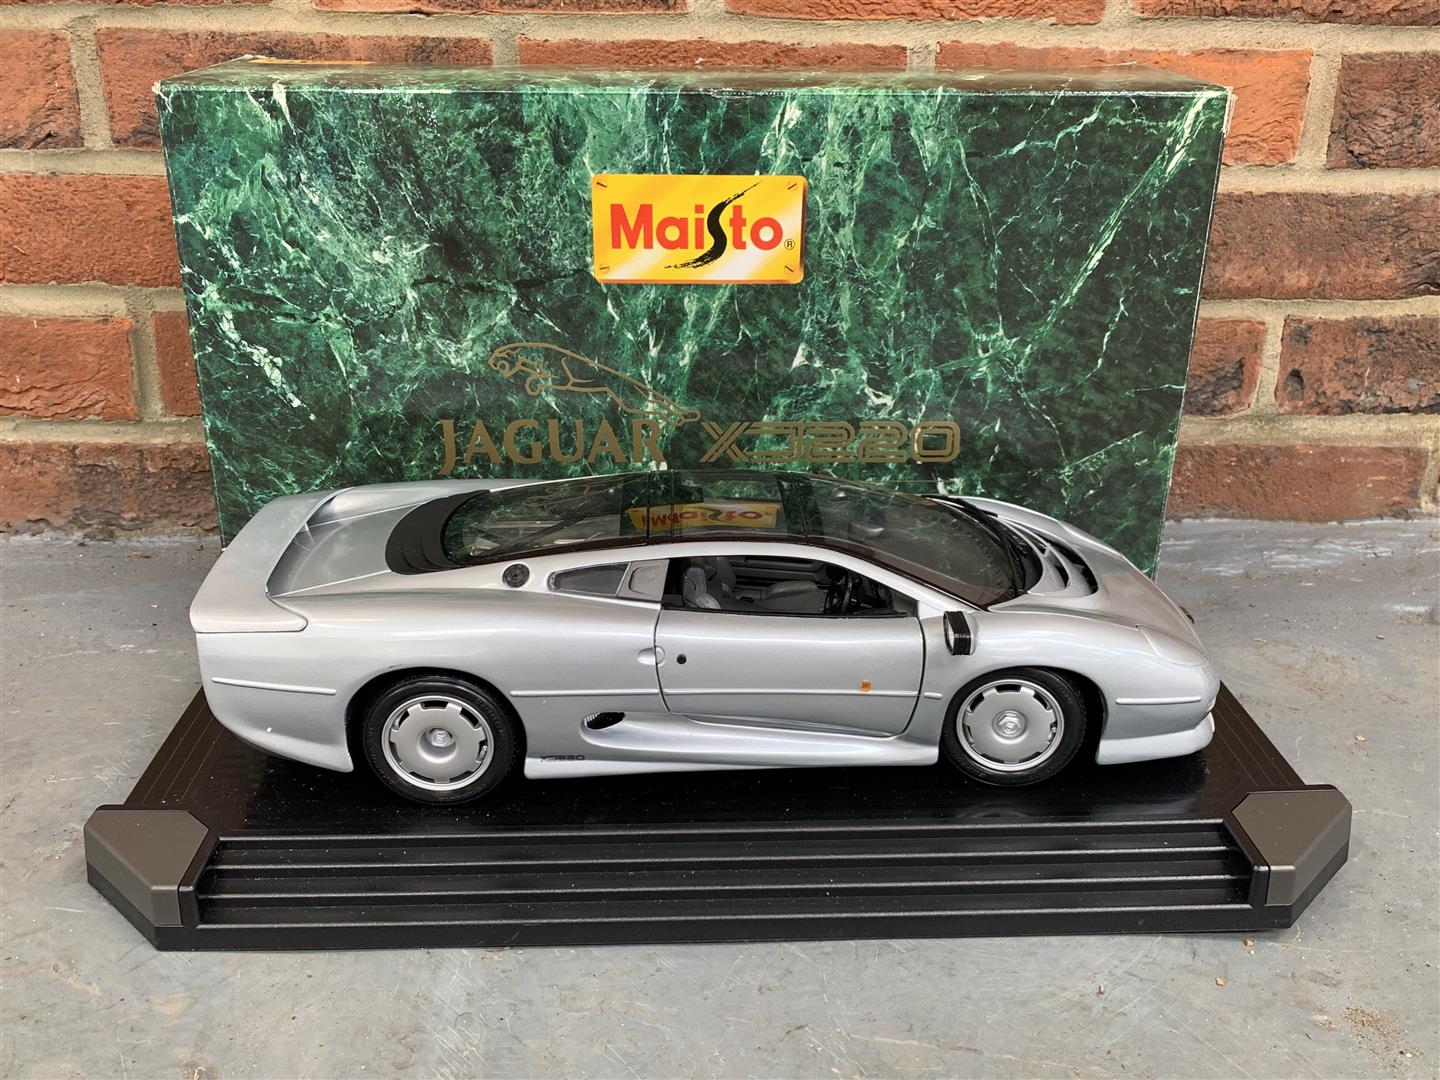 Maisto 1/12 Scale Jaguar XJ220 Boxed Model Car - Image 4 of 5